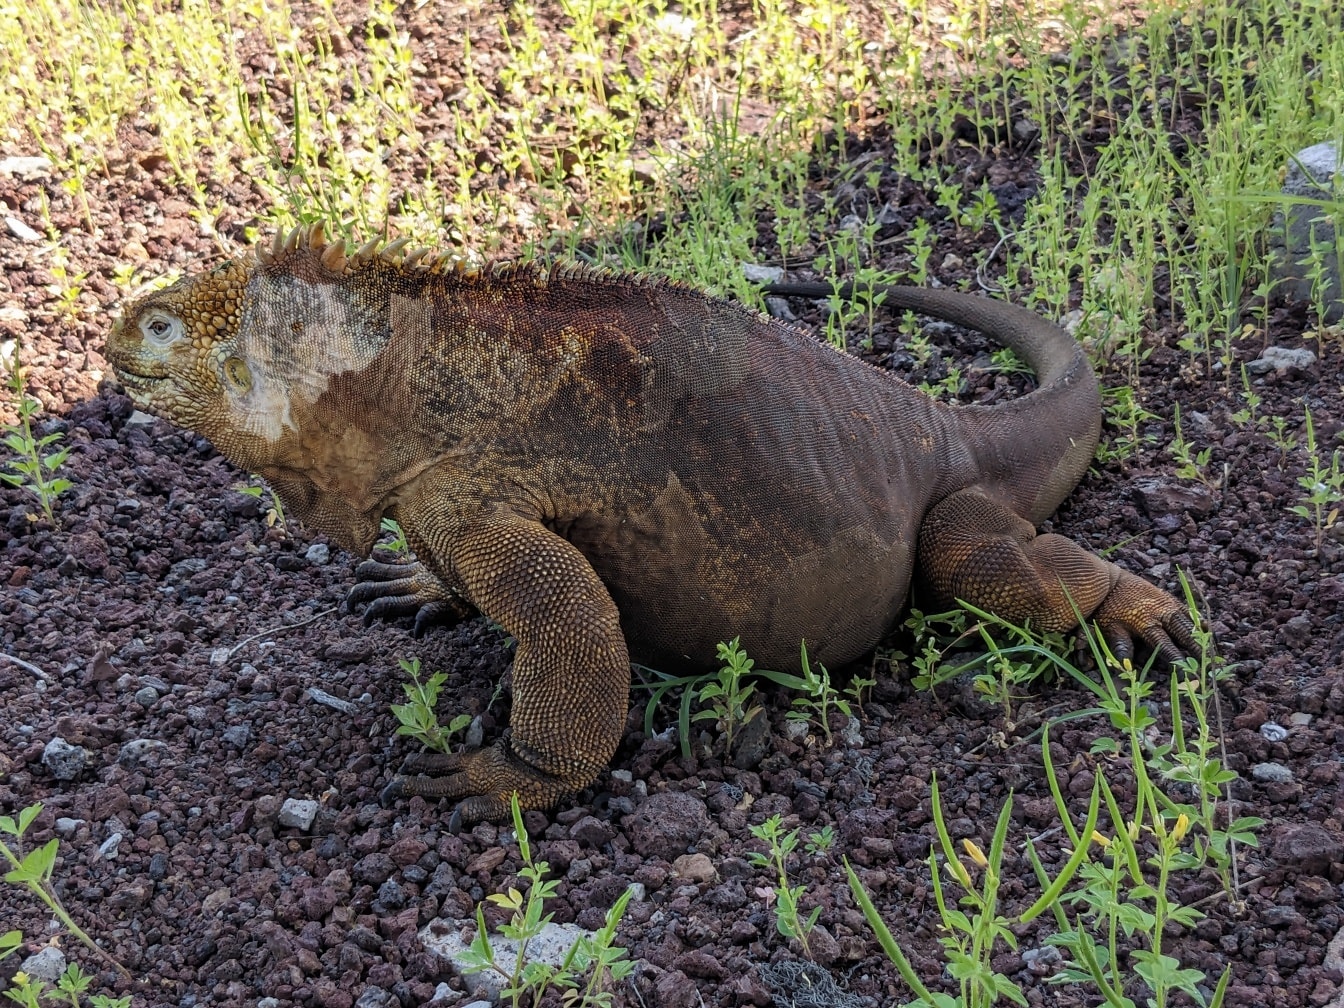 Iguana Galapagos, spesies kadal yang sangat besar (Conolophus subcristatus)